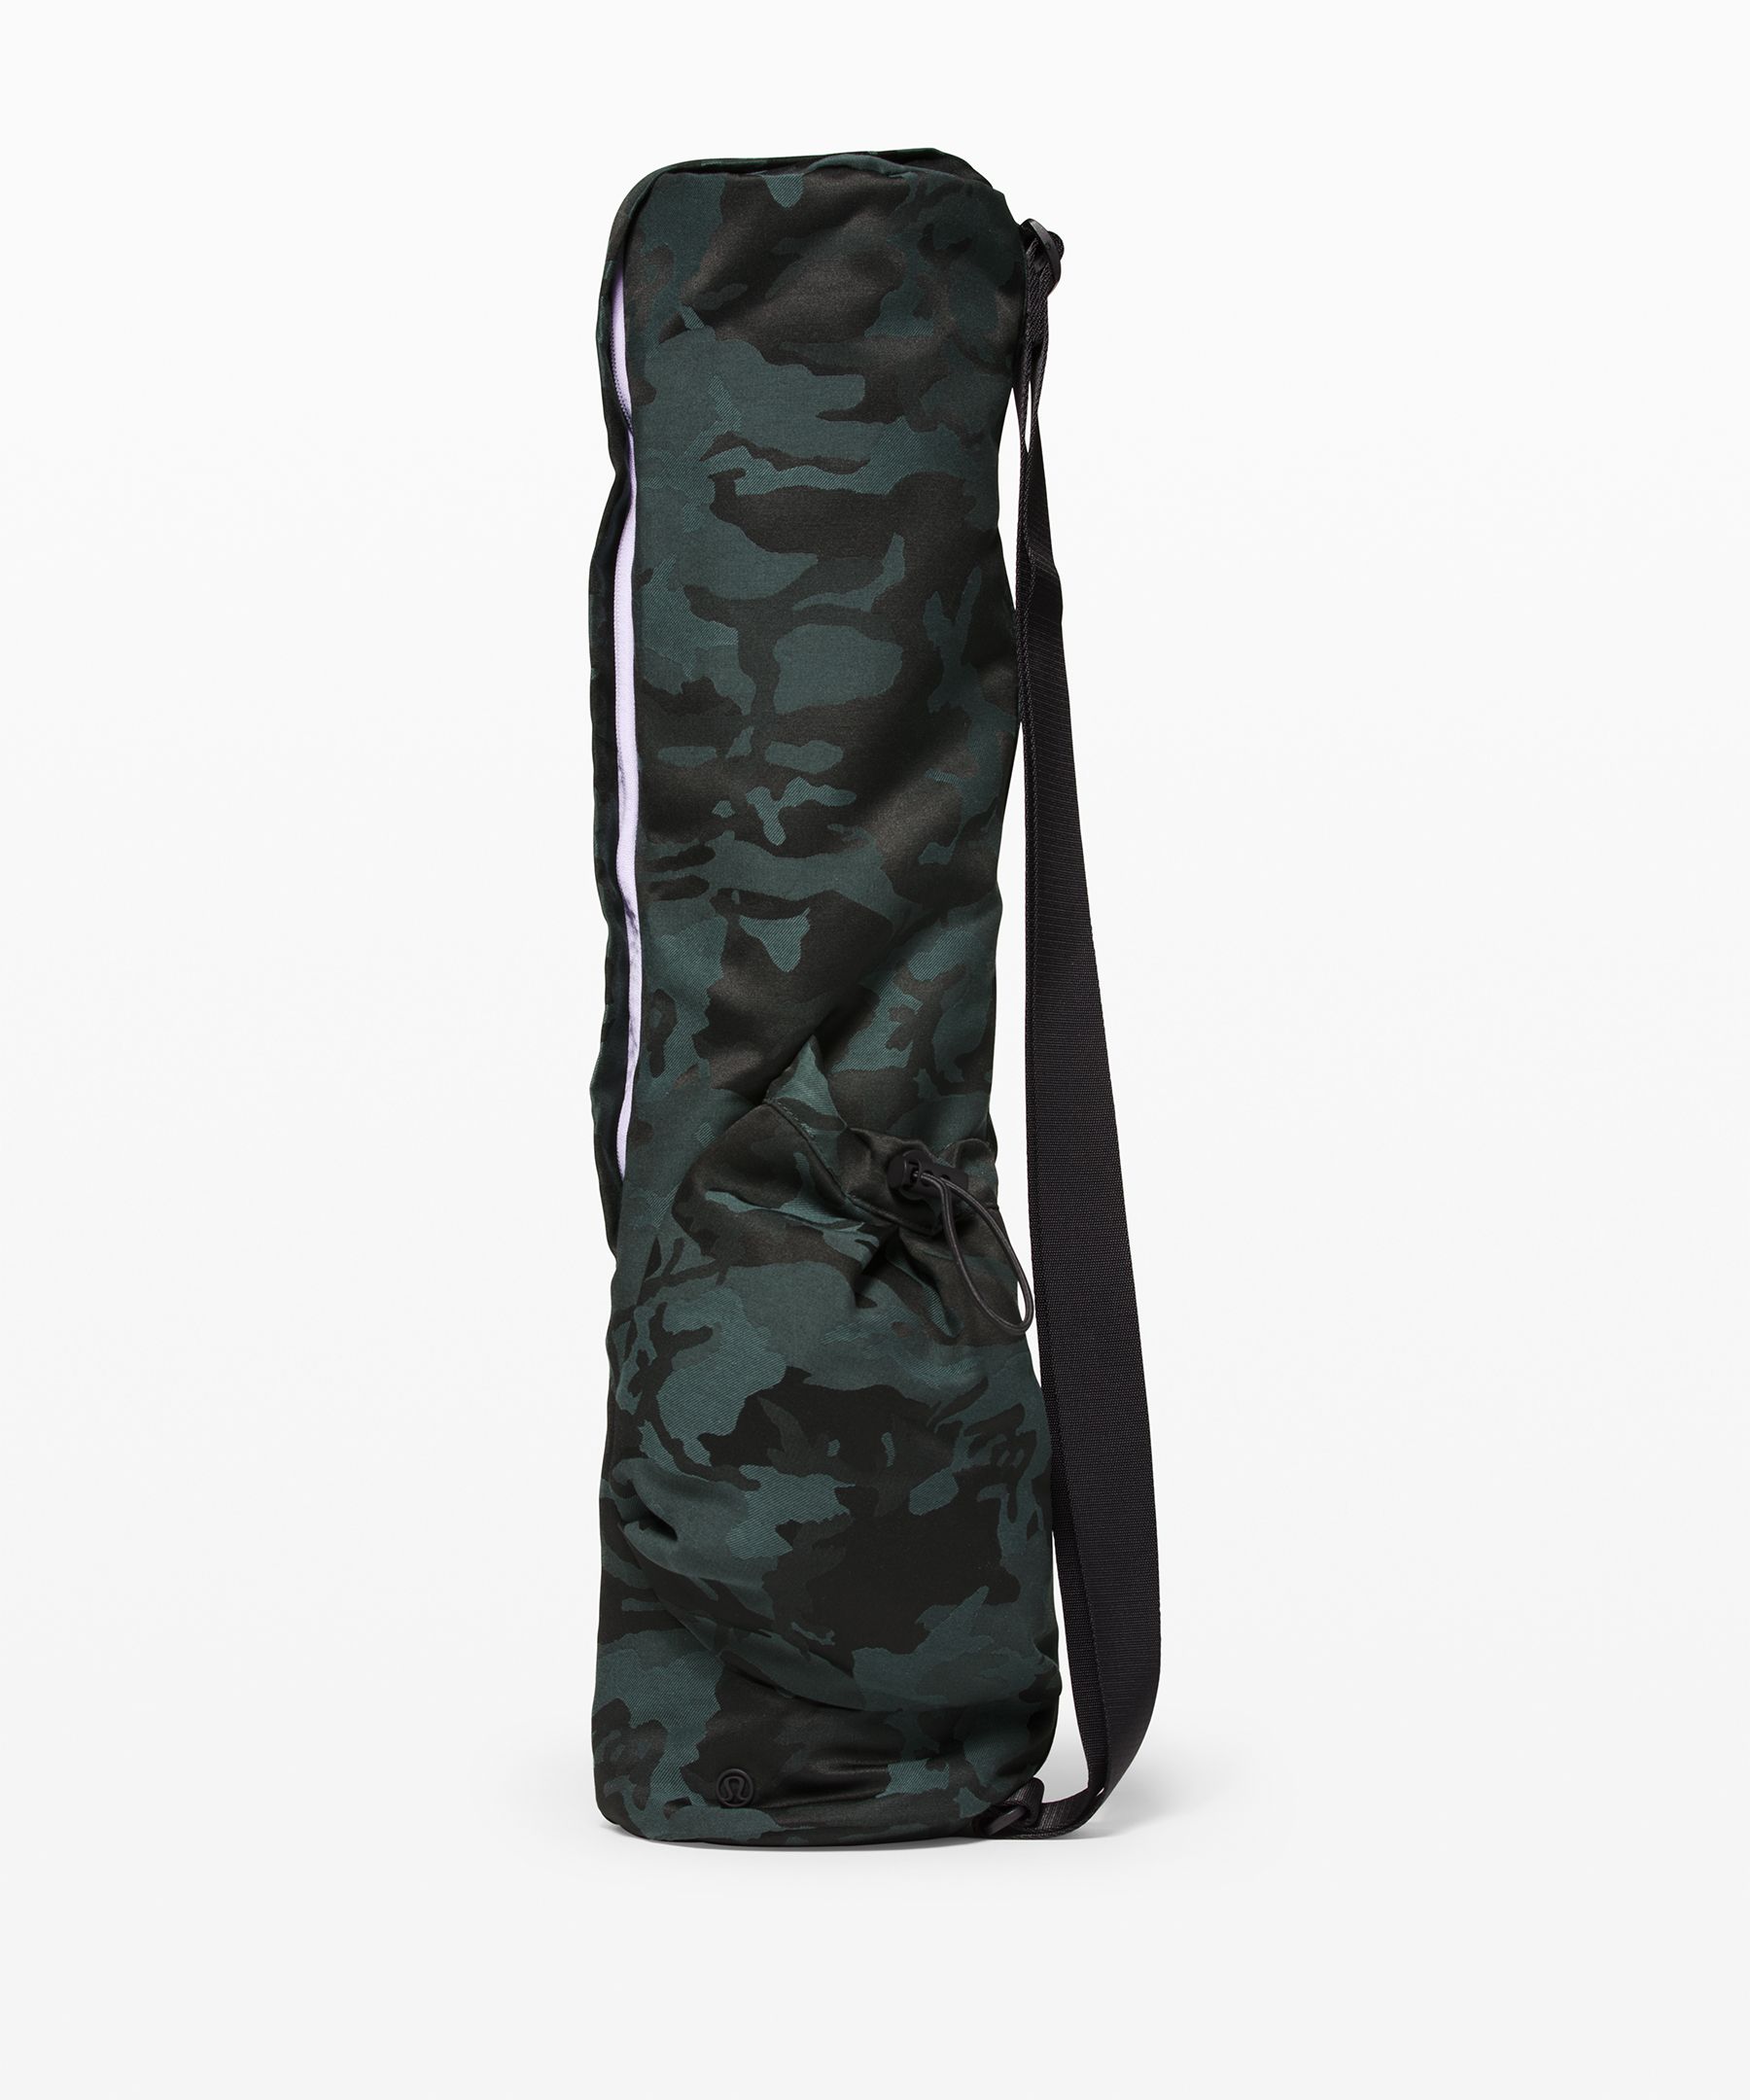 The Yoga Mat Bag | Accessories 